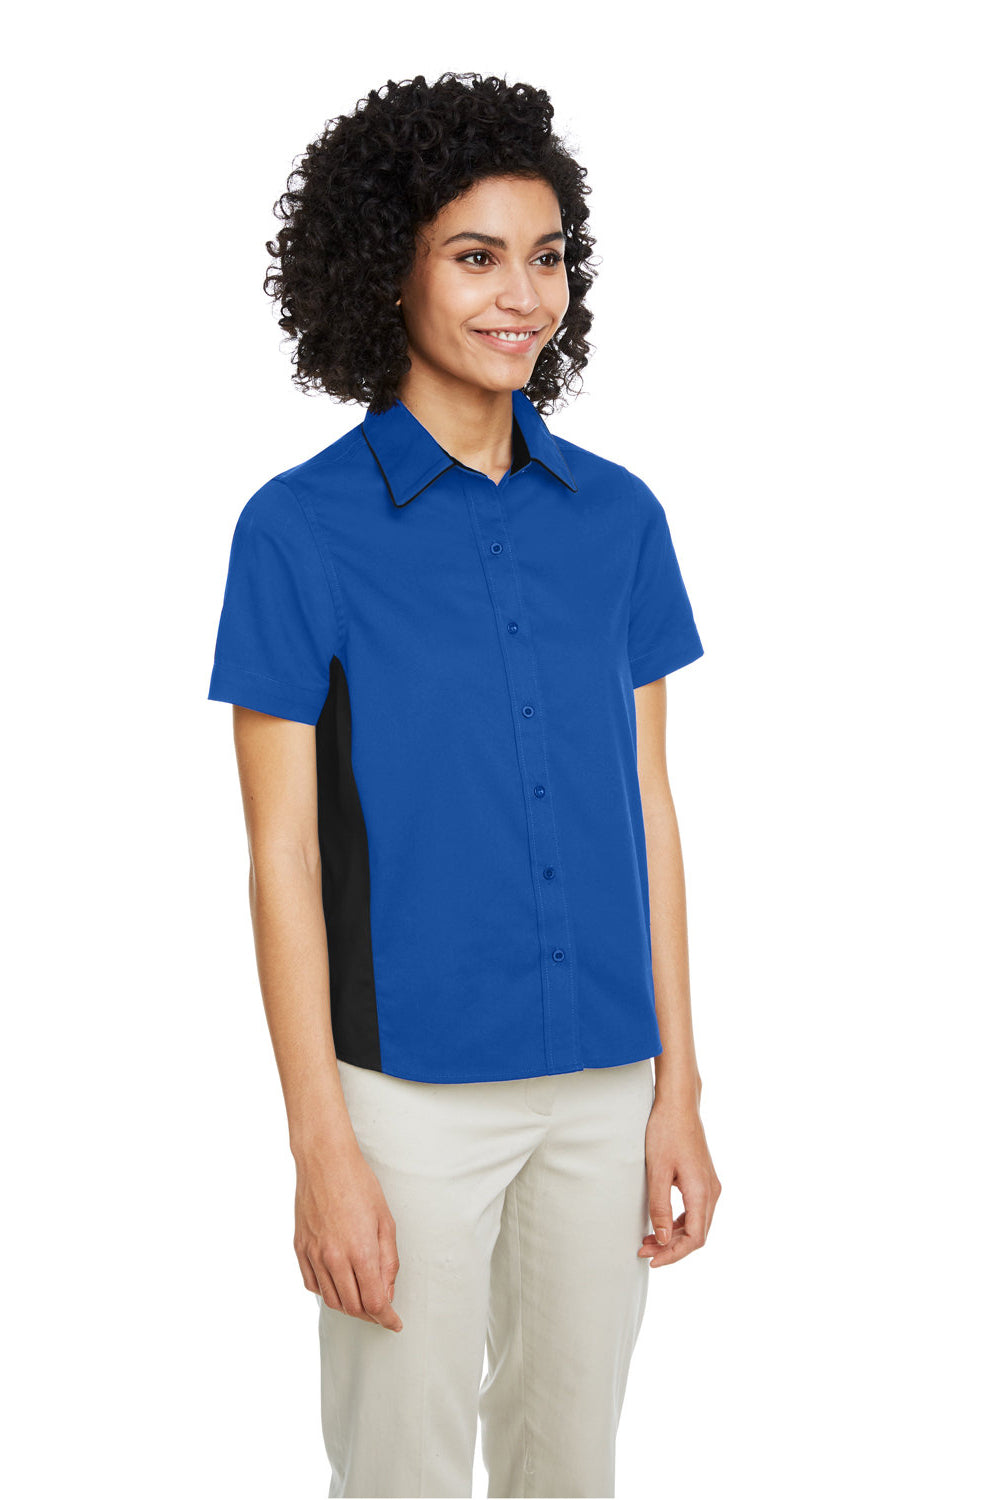 Harriton M586W Womens Flash Colorblock Short Sleeve Button Down Shirt True Royal Blue/Black 3Q